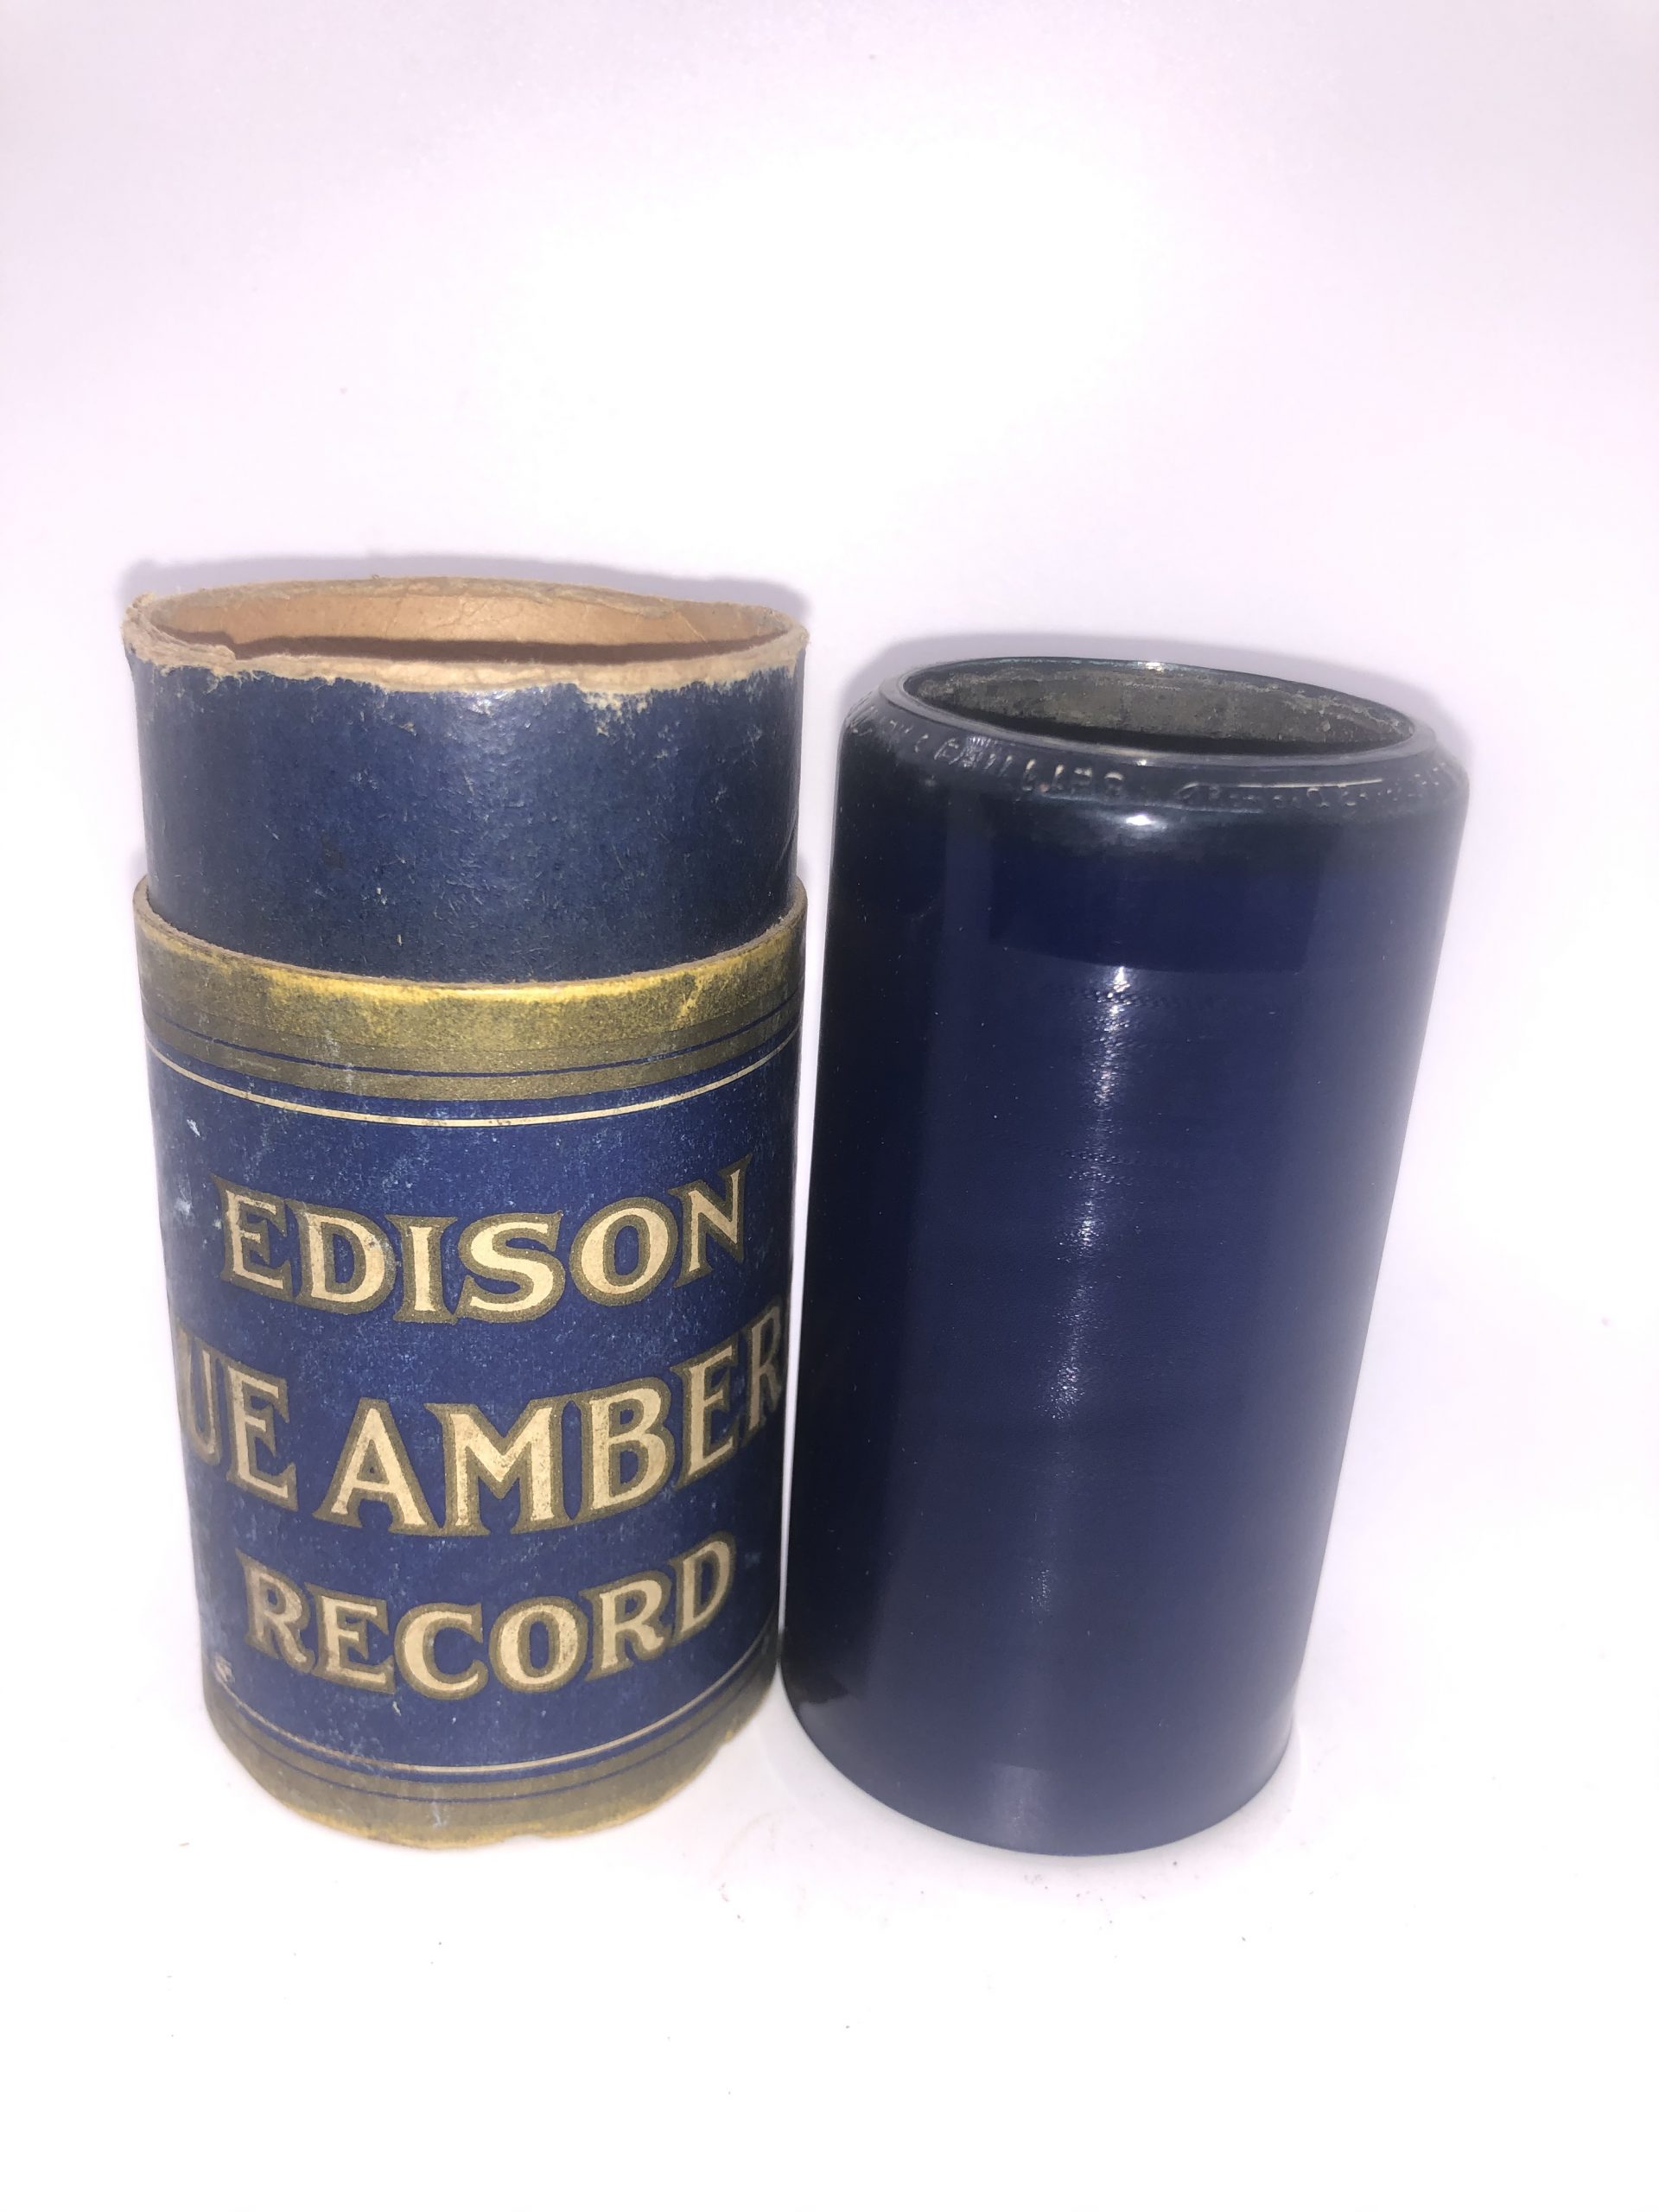 Antique Edison Amberol Record four minutes